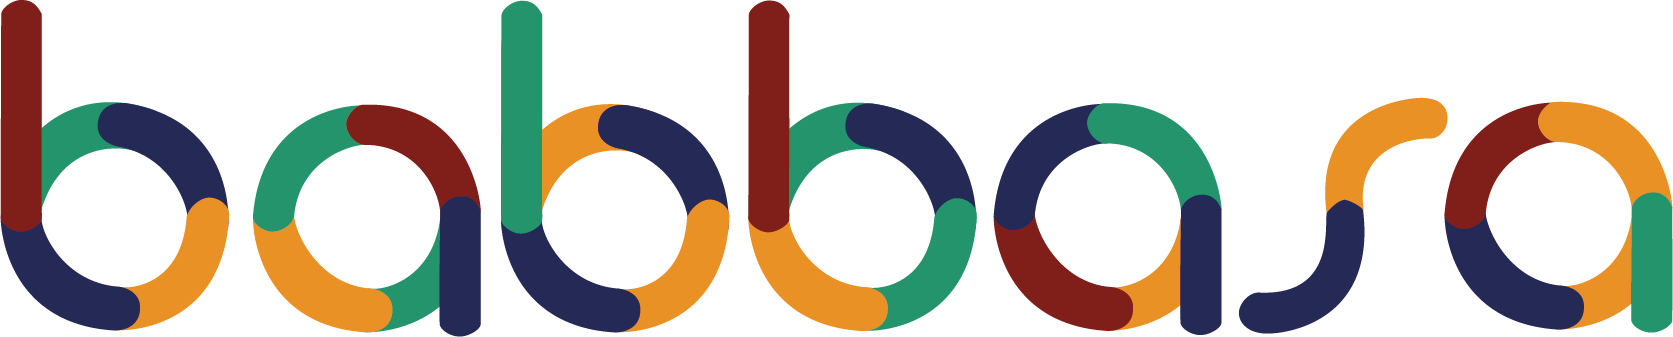 Babbasa Logo (1).png